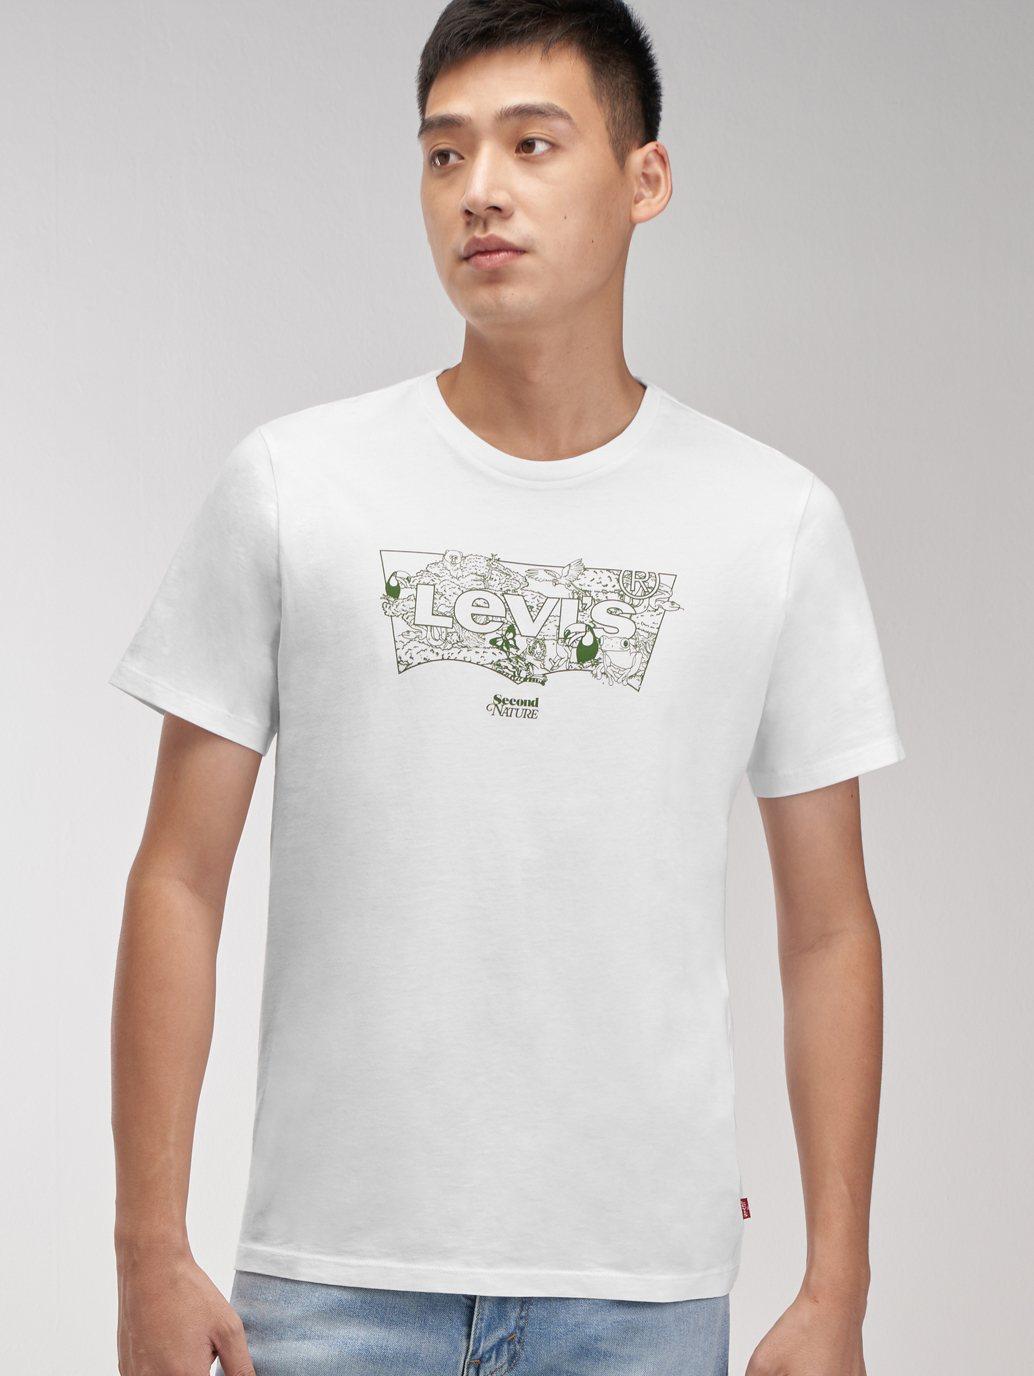 Download Buy Levi's® Men's Housemark Graphic T-Shirt | Levi's ...